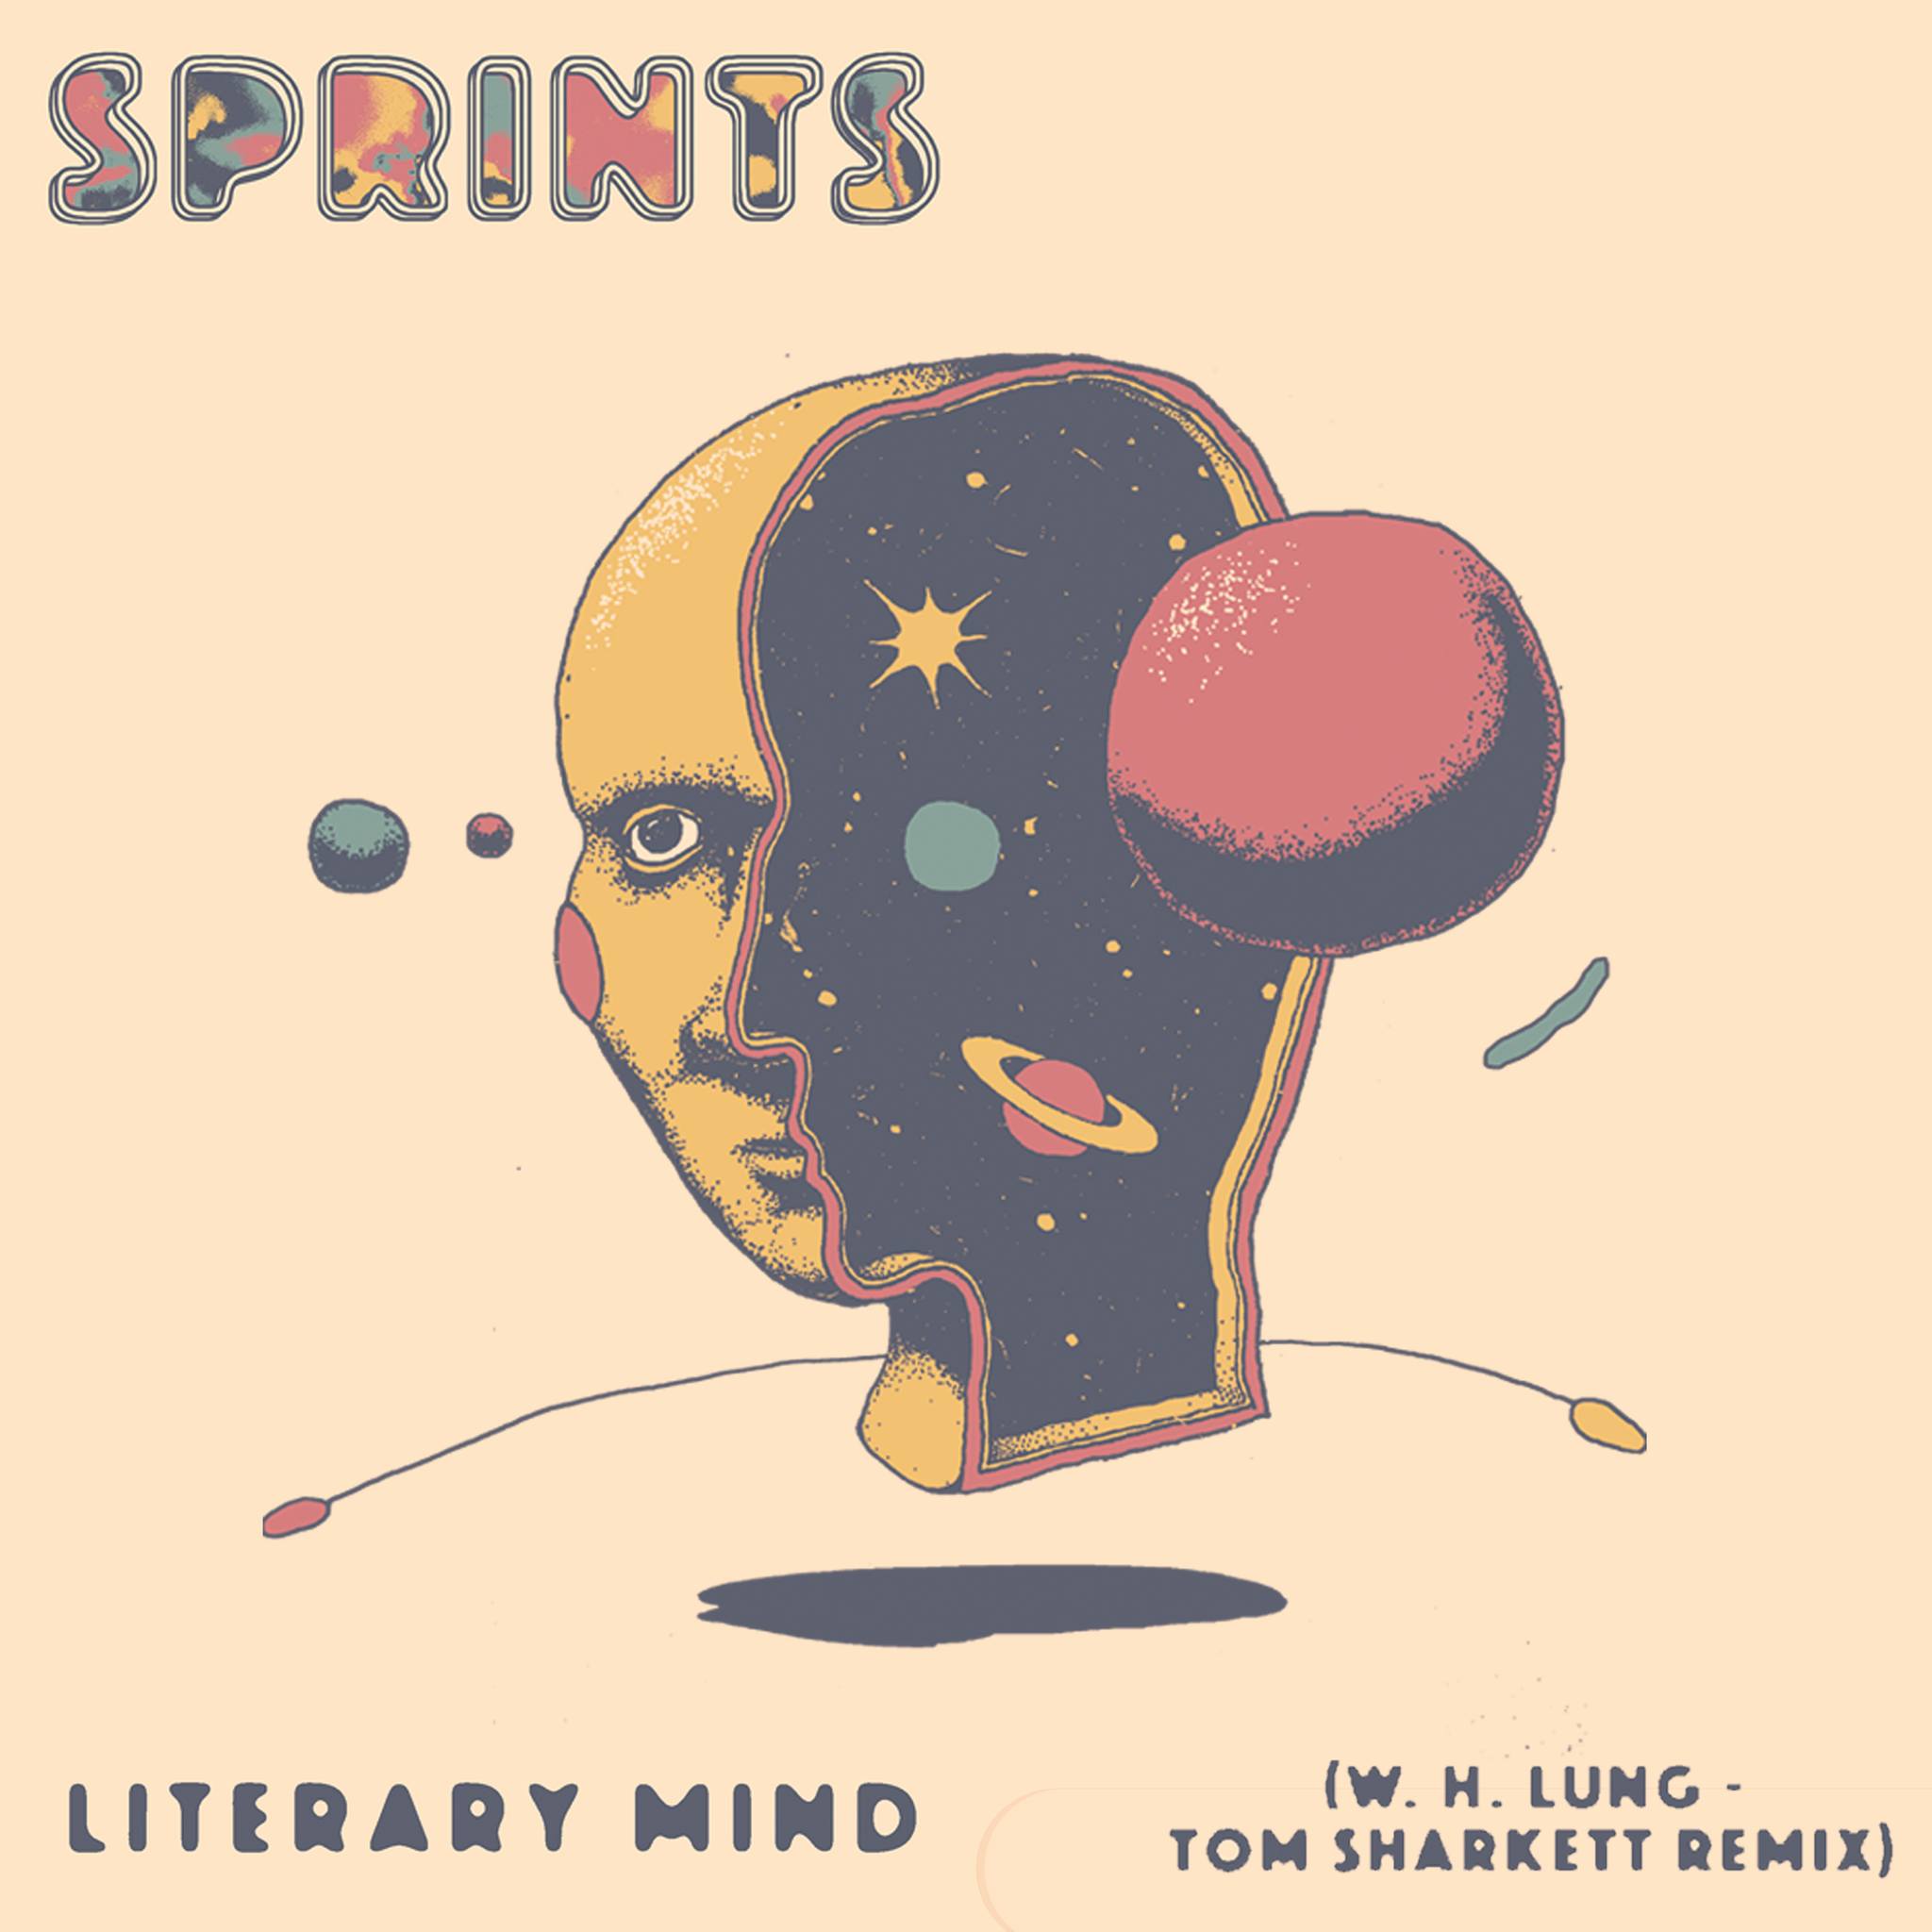 Literary Mind - remix cover art